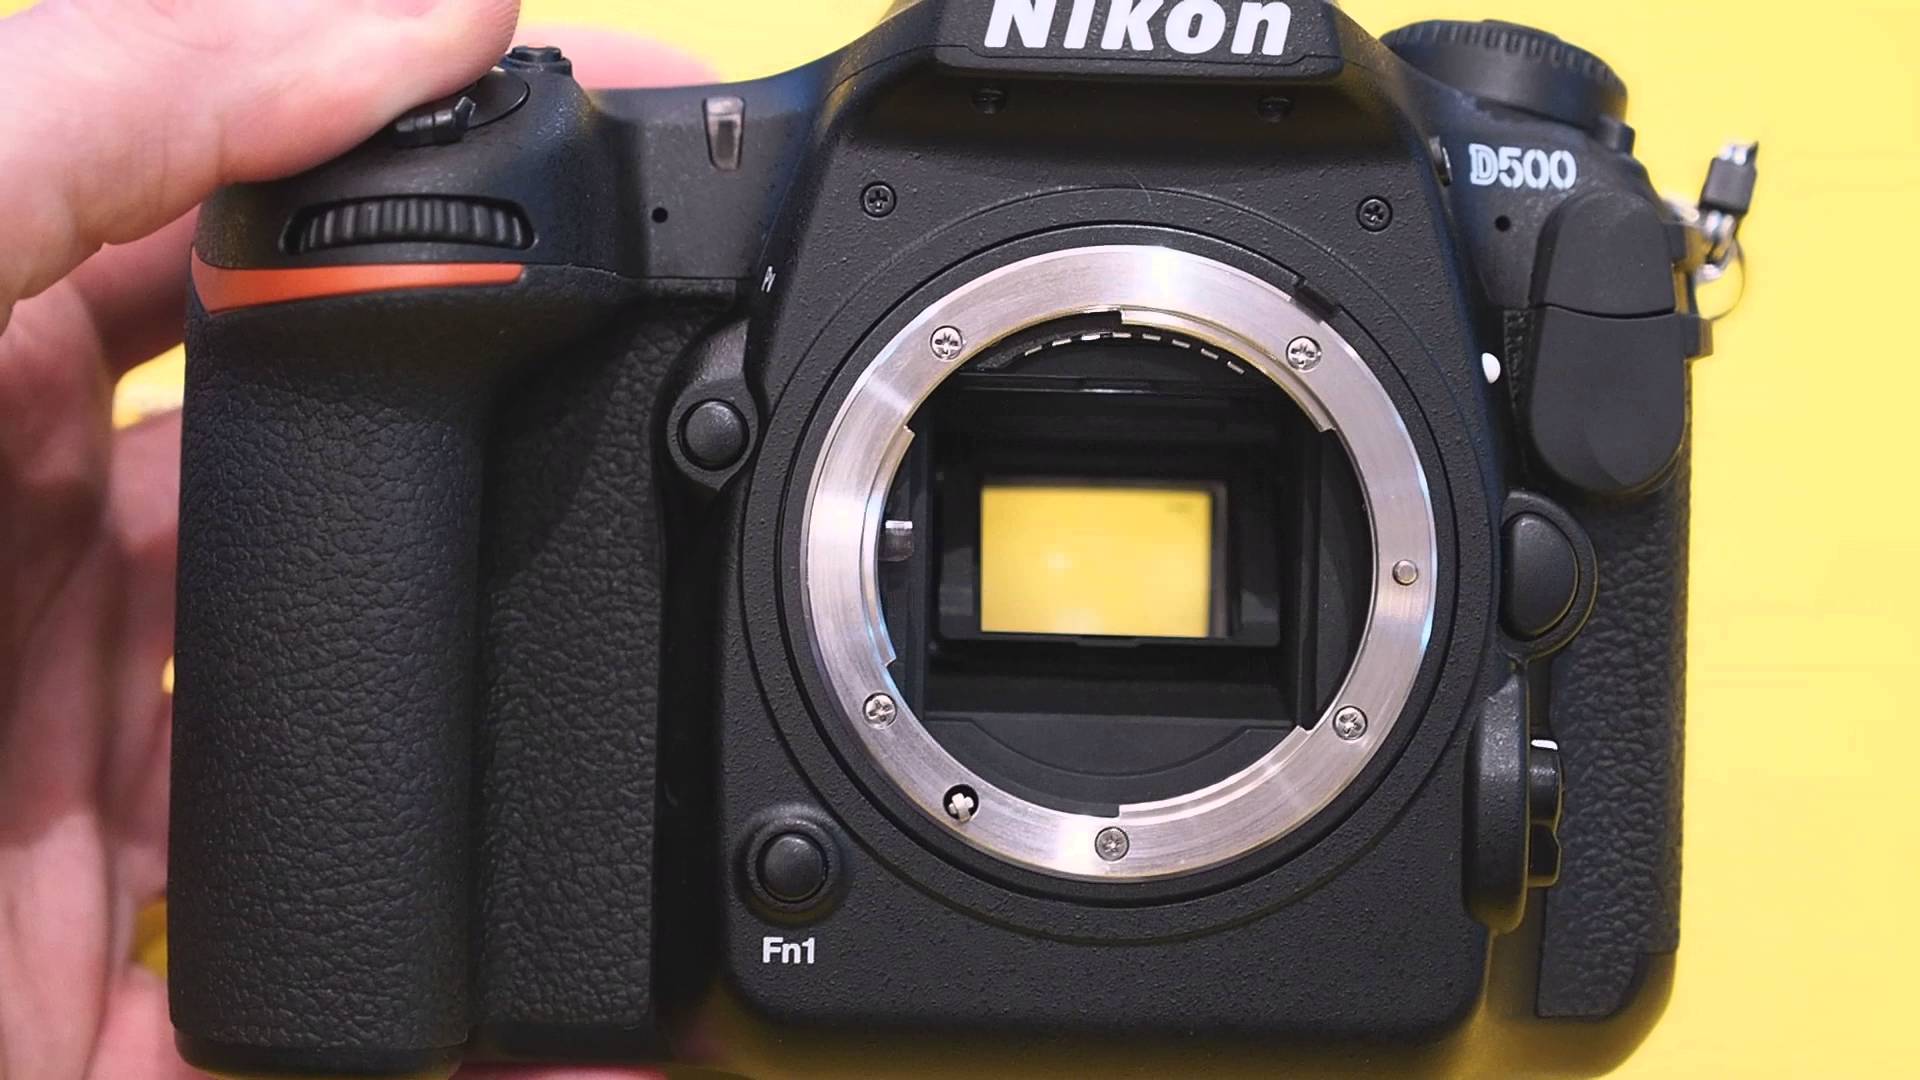 Hot – Grey Market Nikon D500 now $1,499 ! (New Lowest Price)